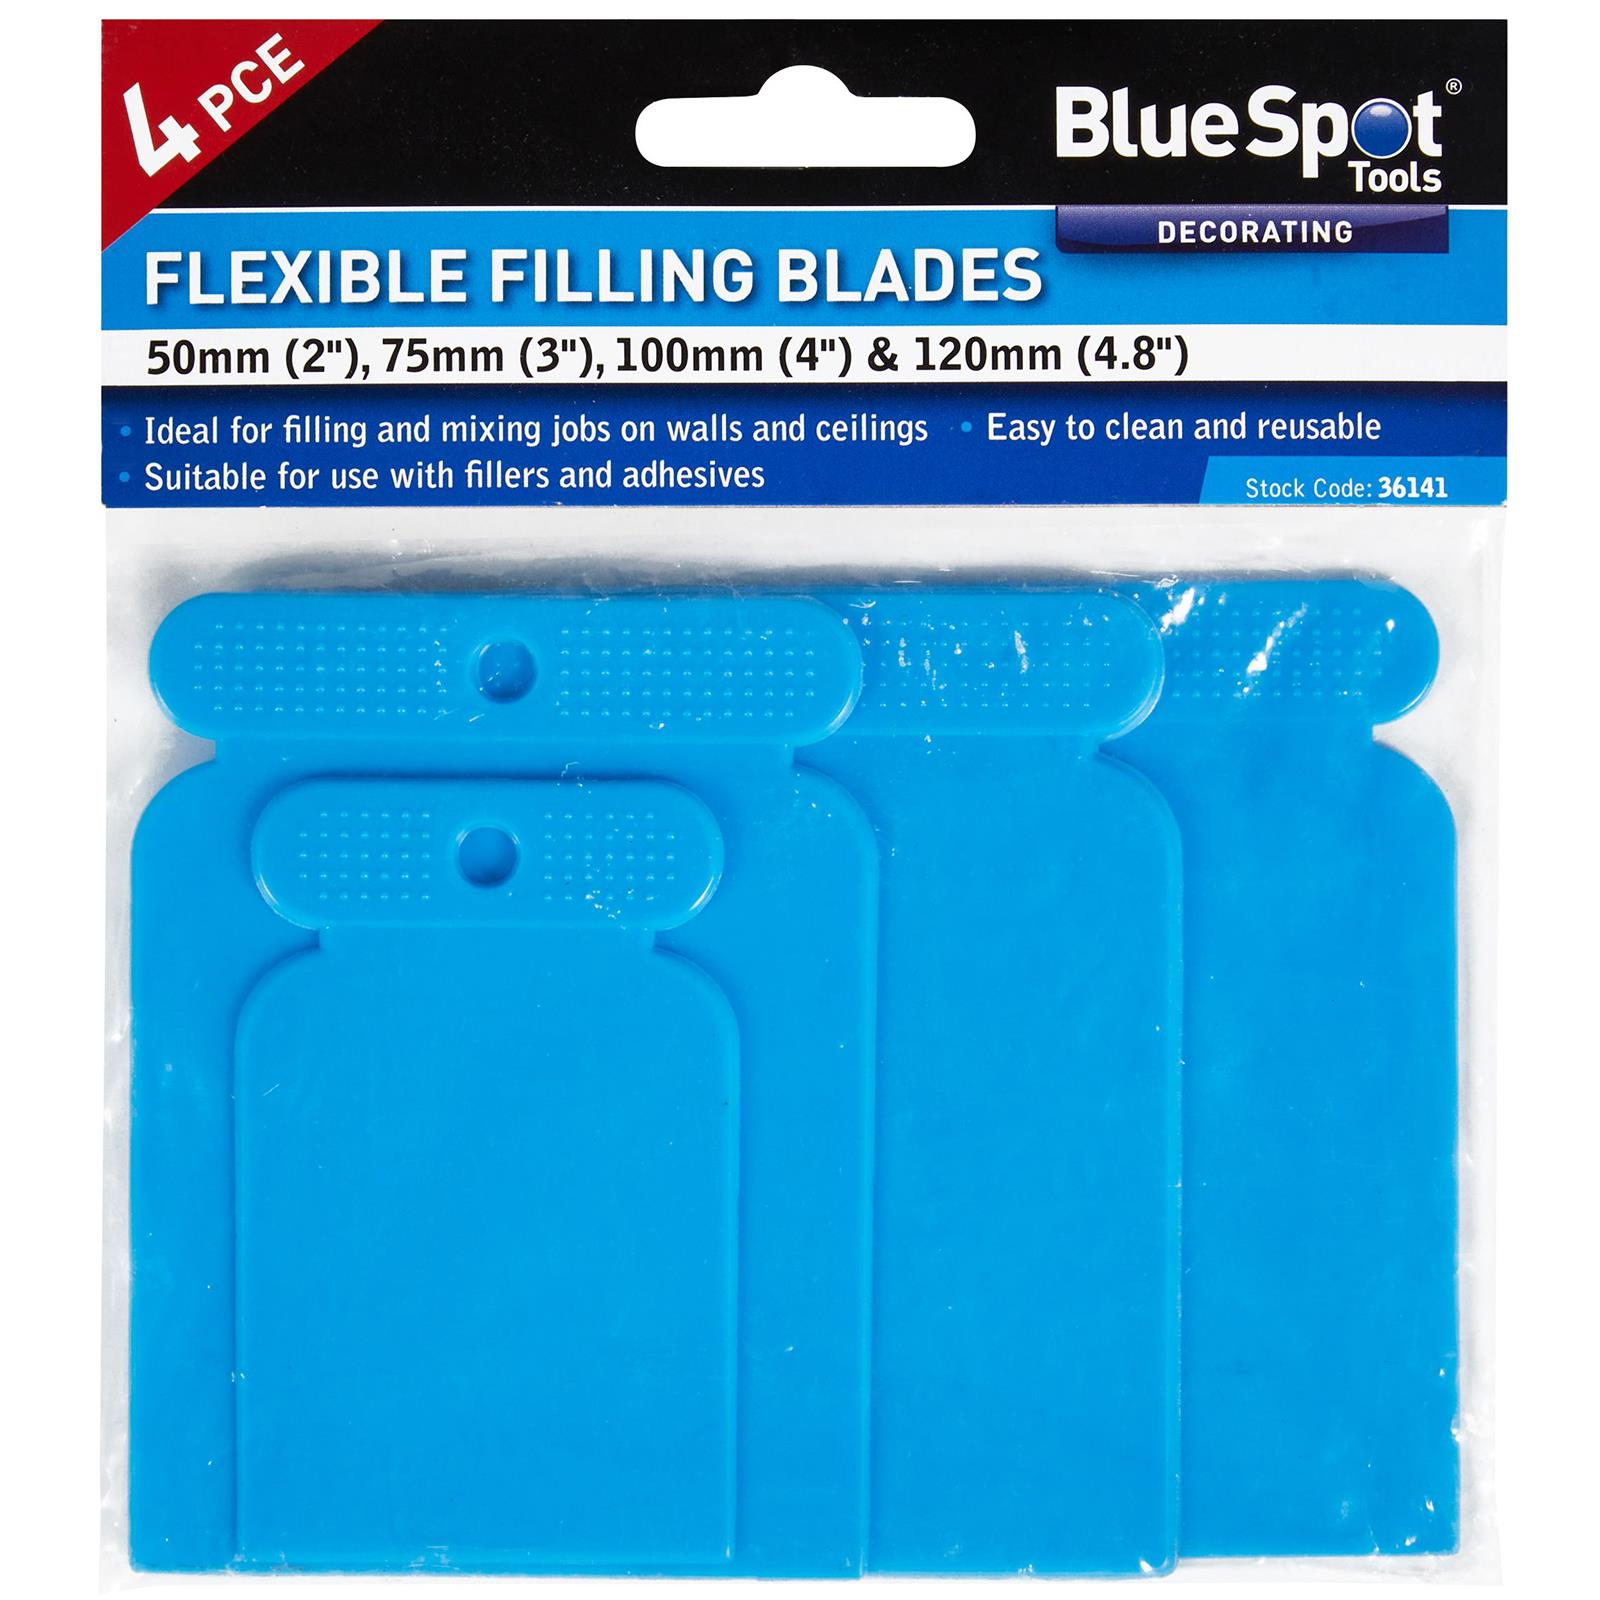 BlueSpot Flexible Filling Blades 4pc